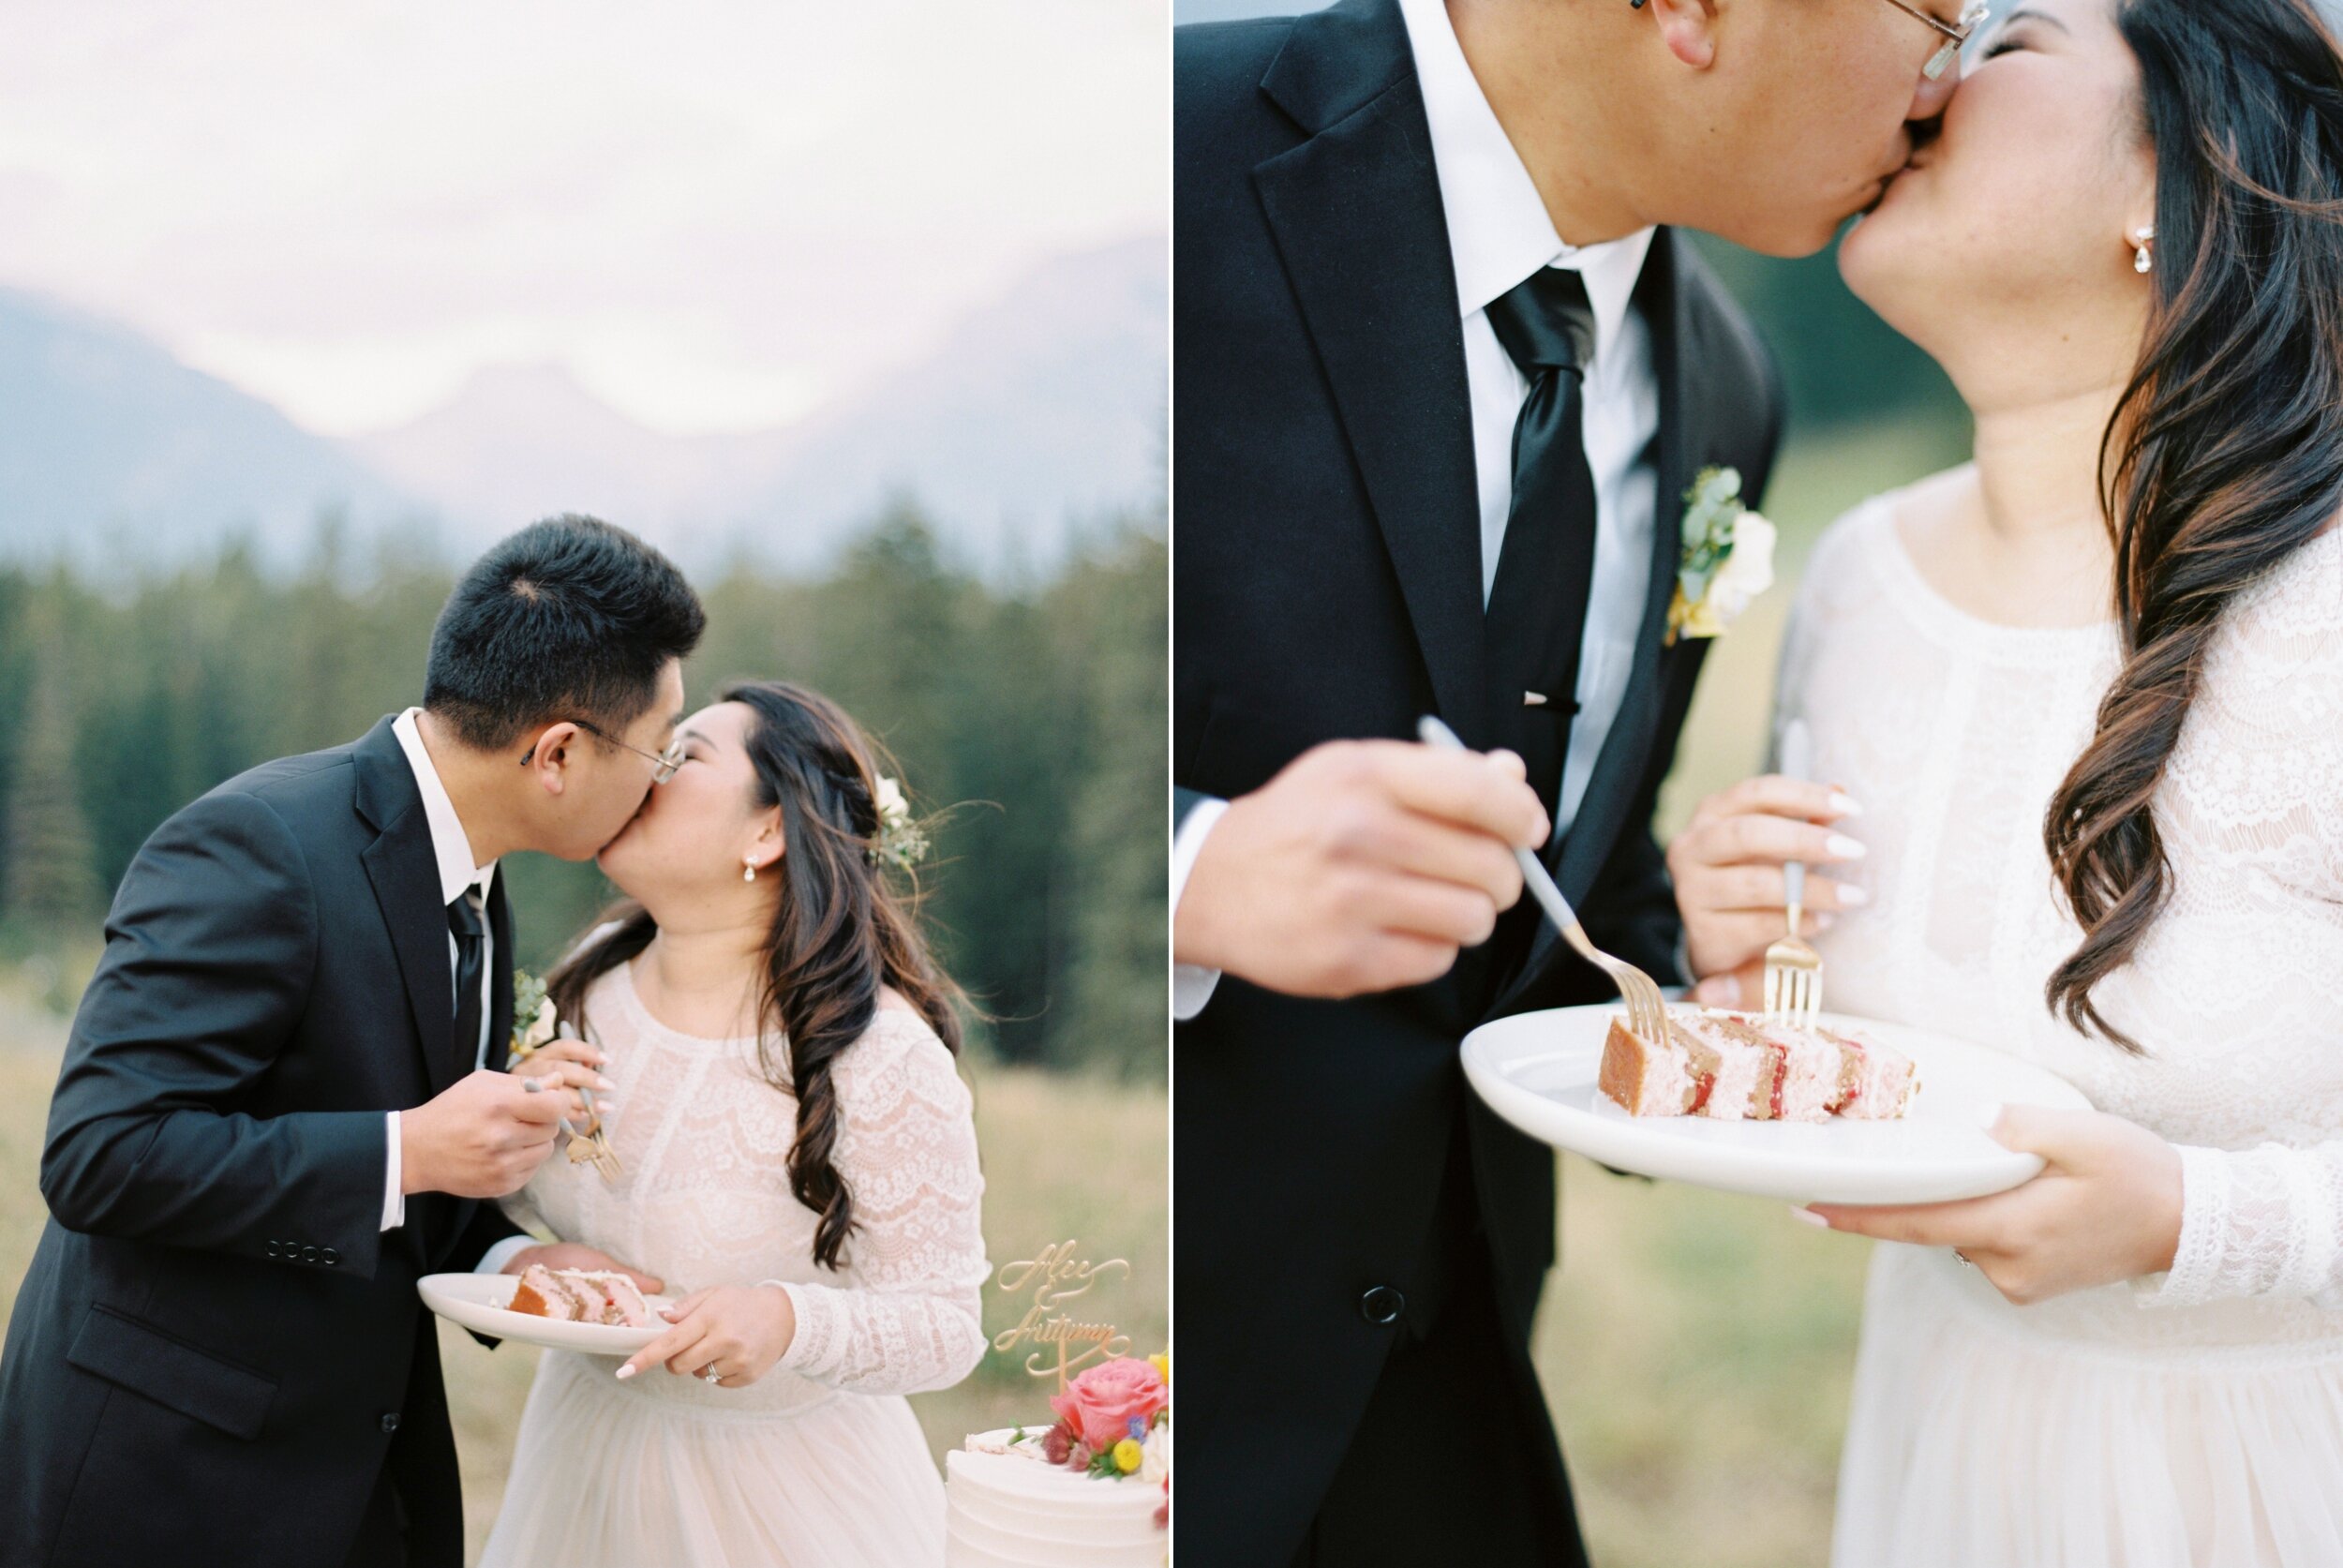  Banff wedding photographers | Justine milton photography | fine art film destination wedding photographer | Banff elopement wedding dinner cake 